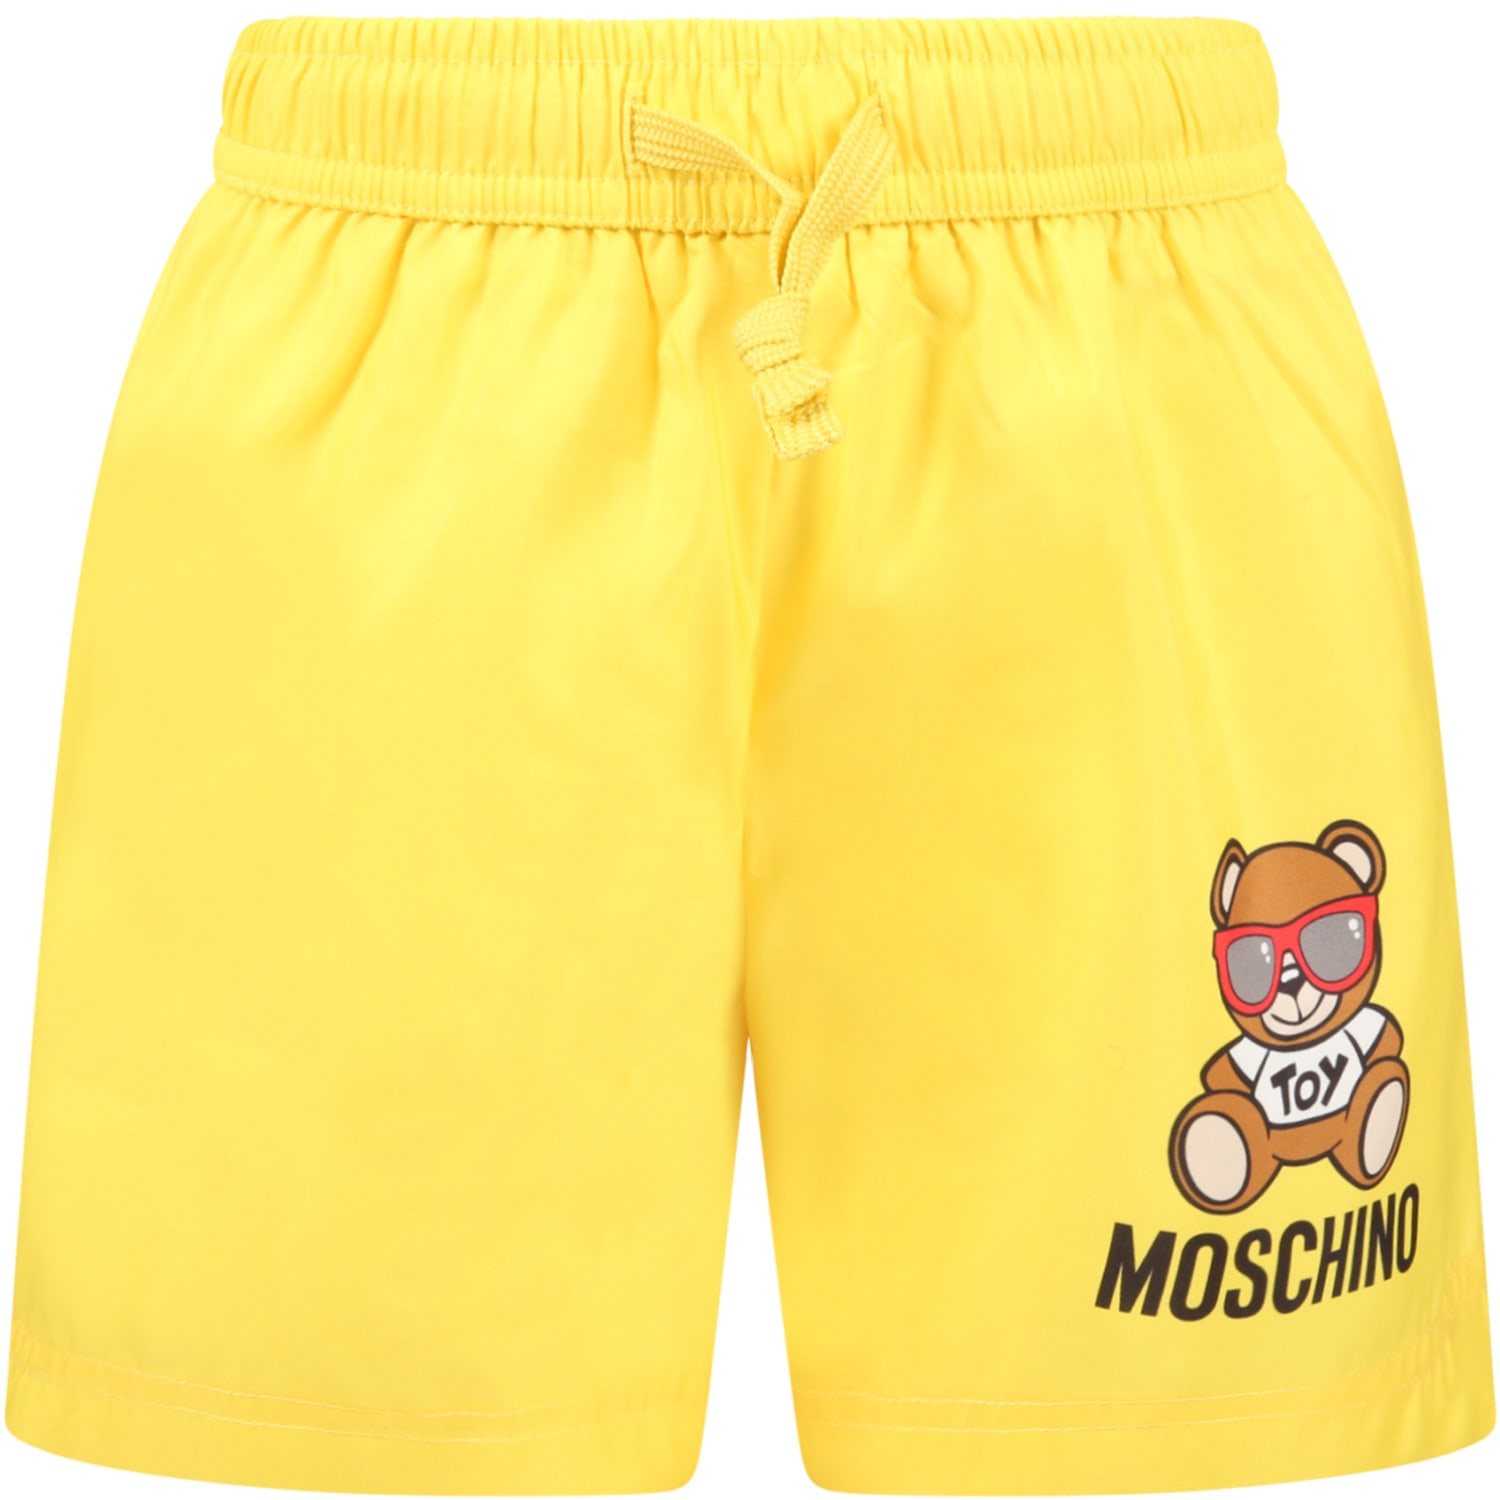 Moschino Yellow Swim-trunks For Boy With Teddy Bear